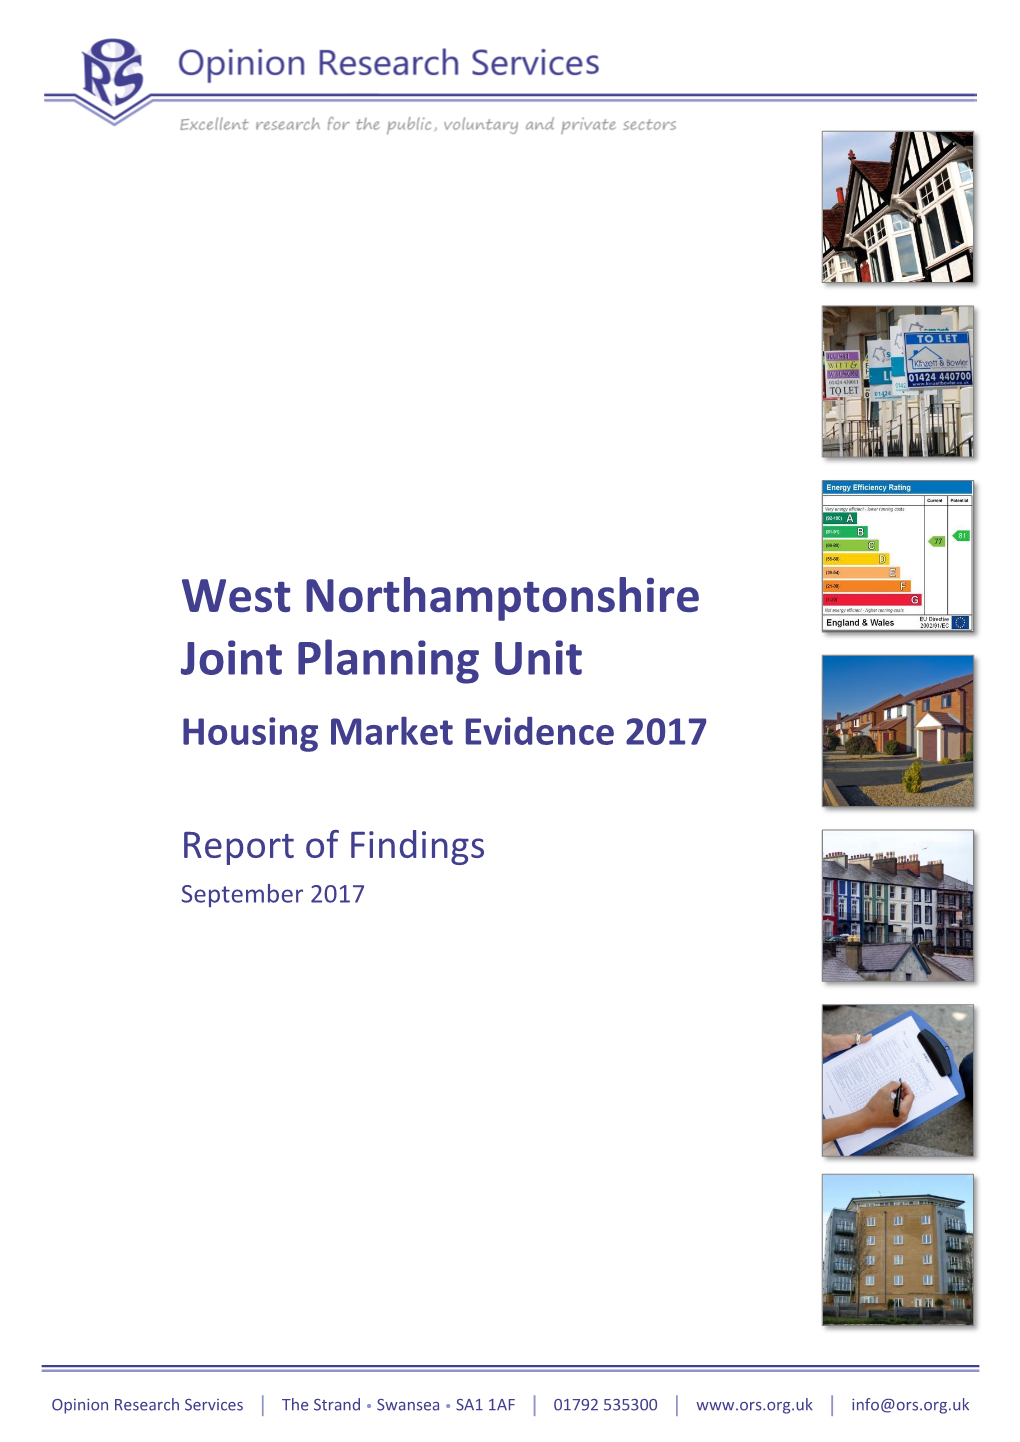 West Northamptonshire Joint Planning Unit Housing Market Evidence 2017